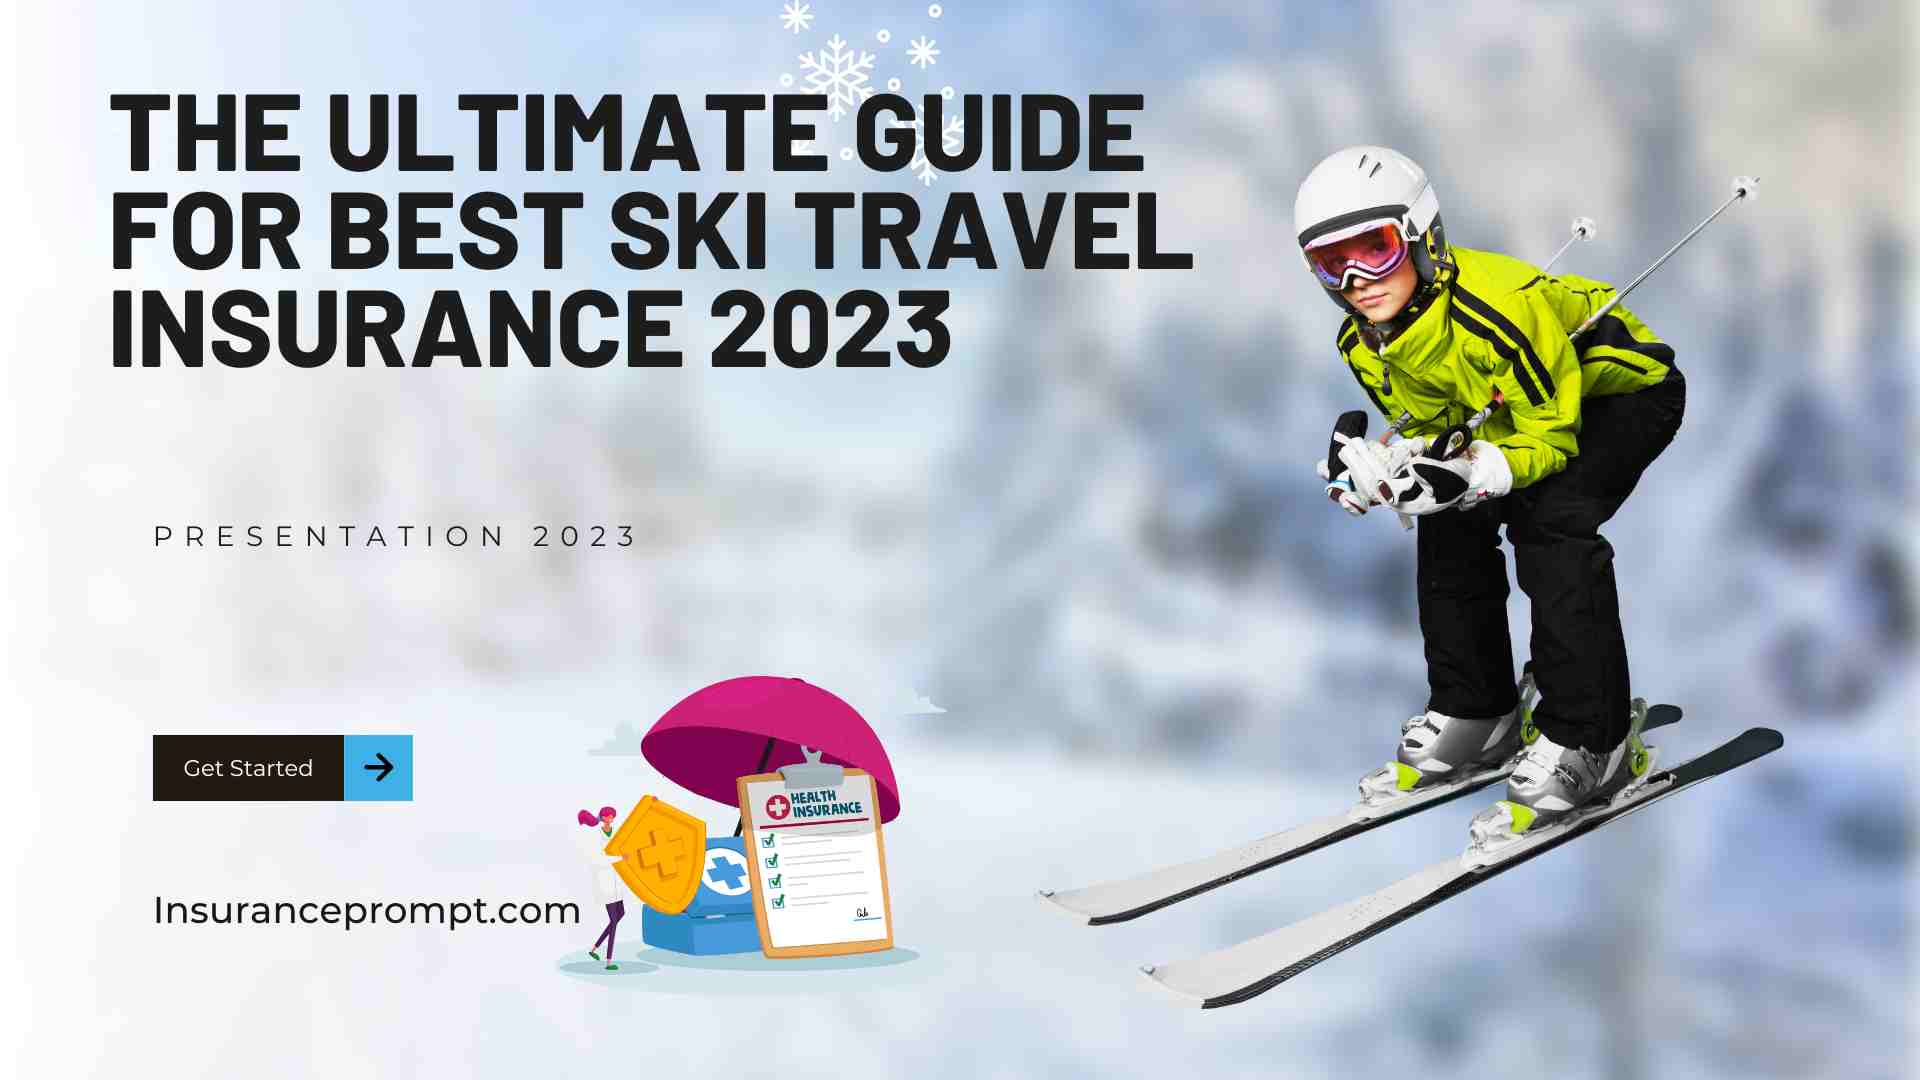 The Ultimate Guide for best ski travel insurance 2023